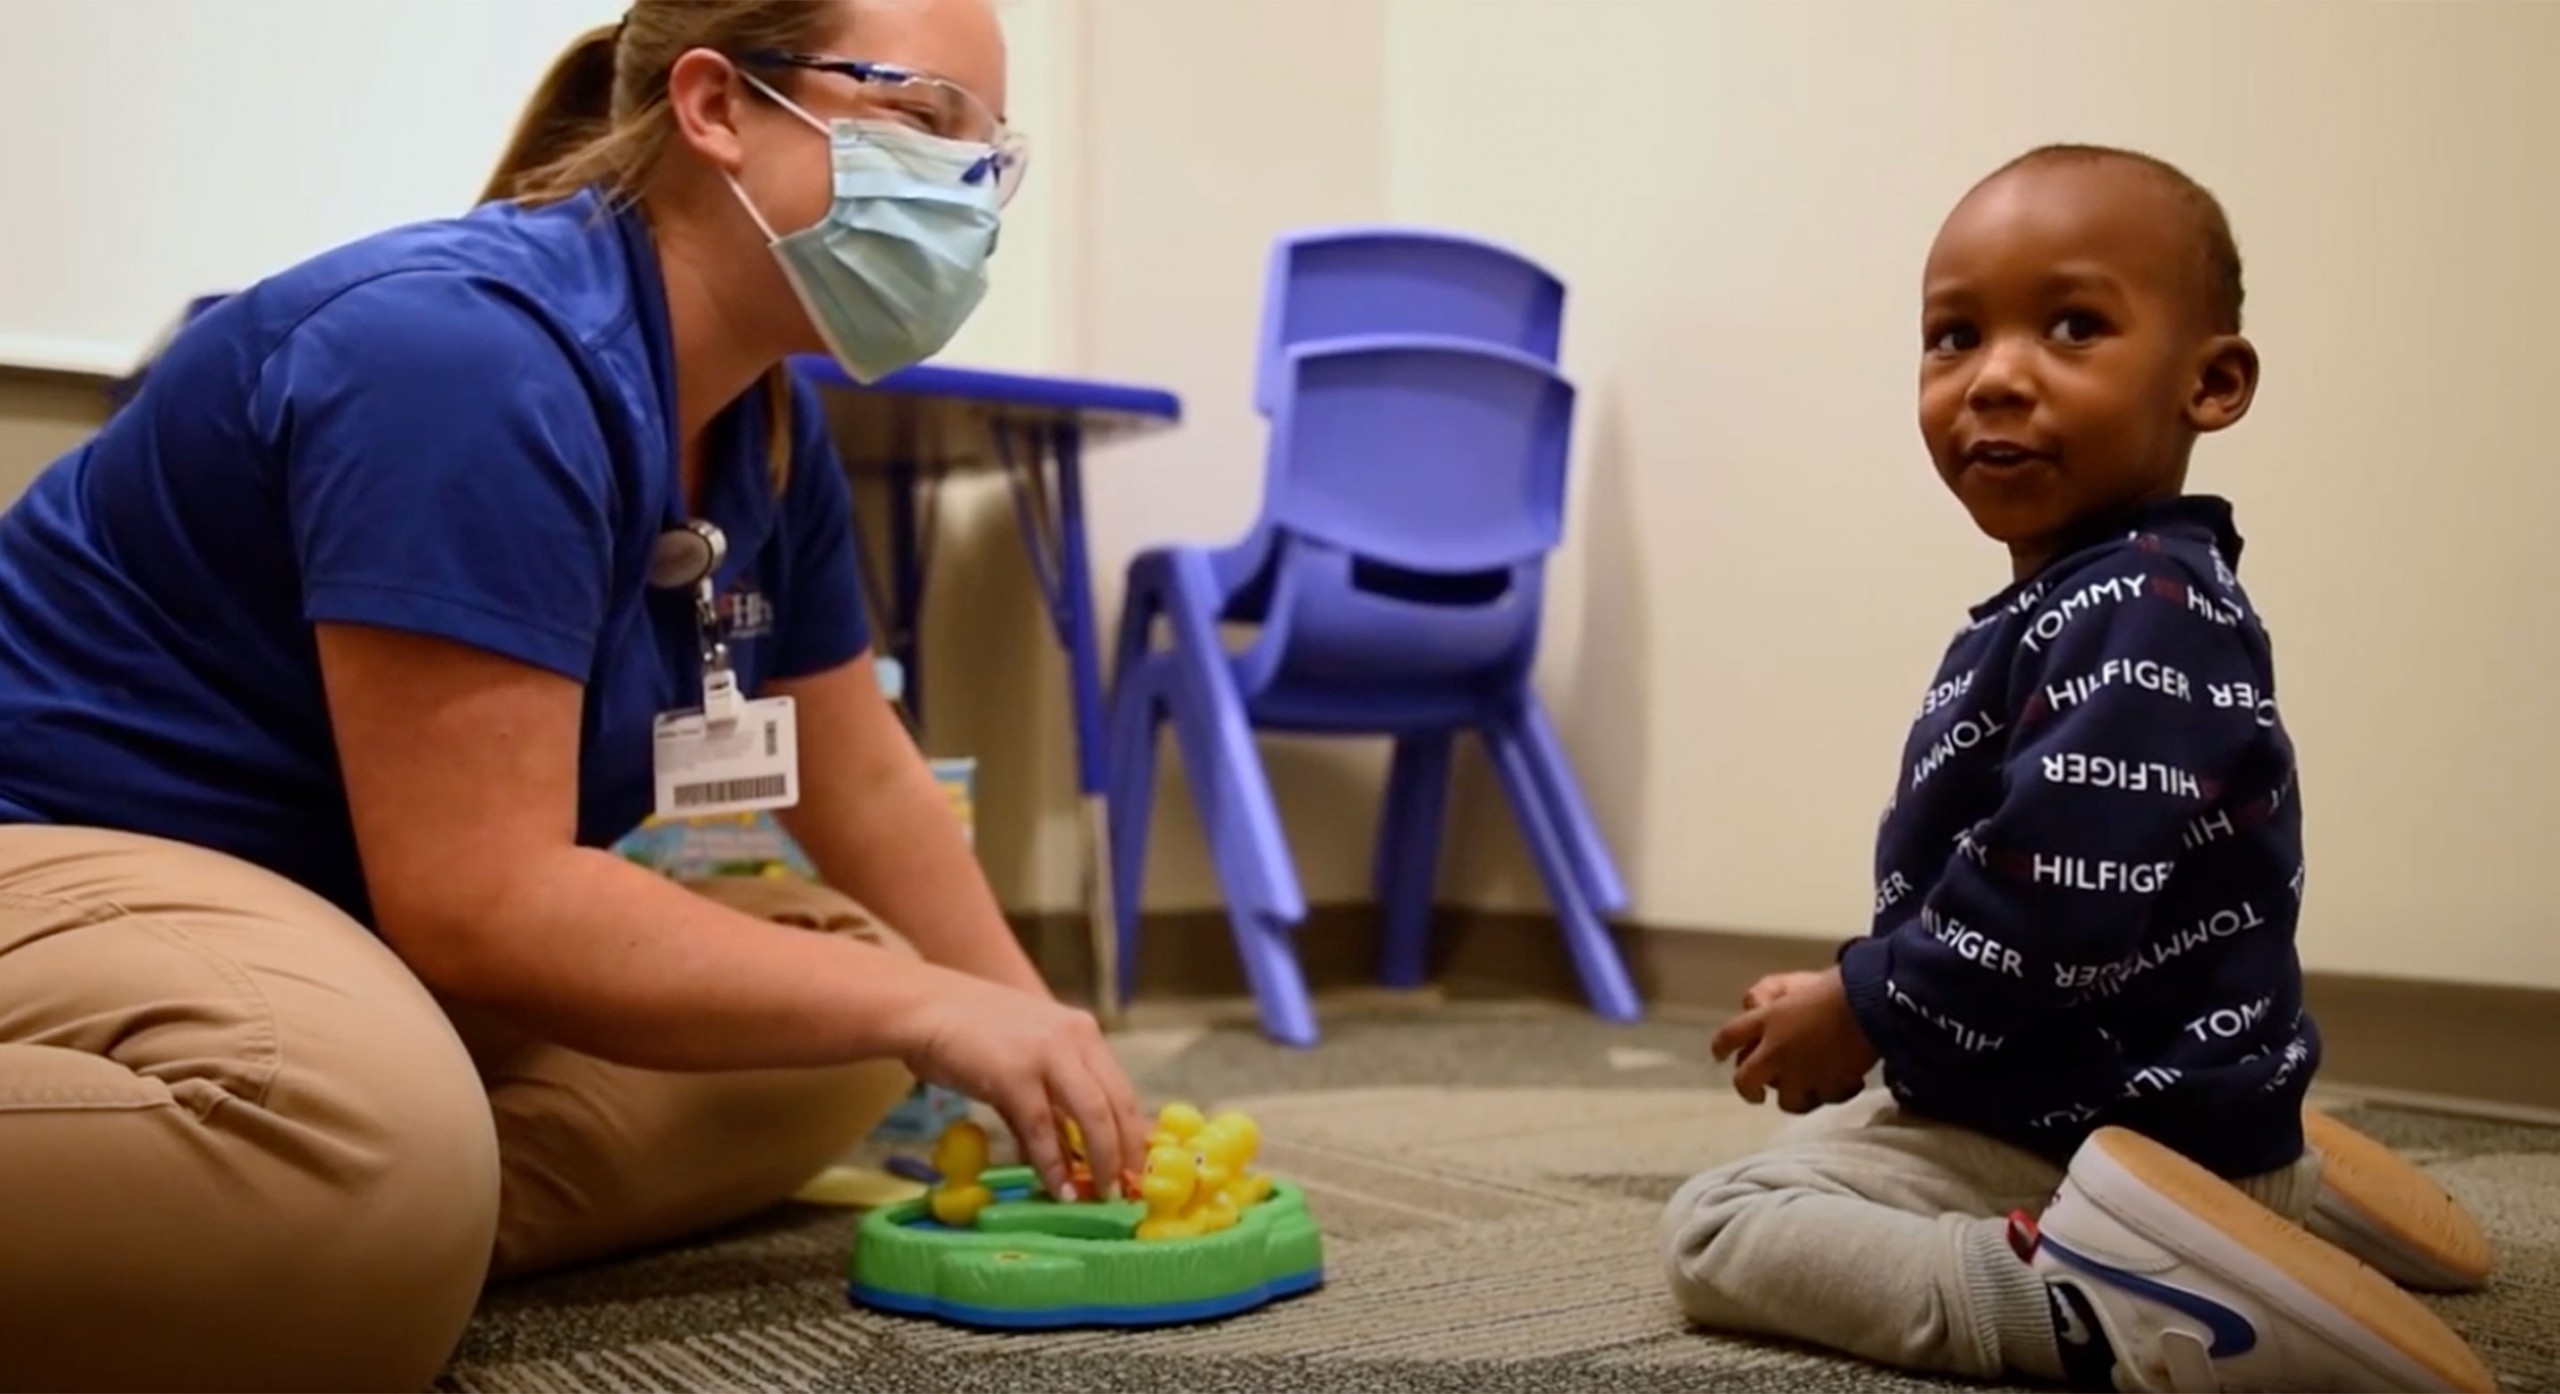 A nurse plays with a child on the floor.